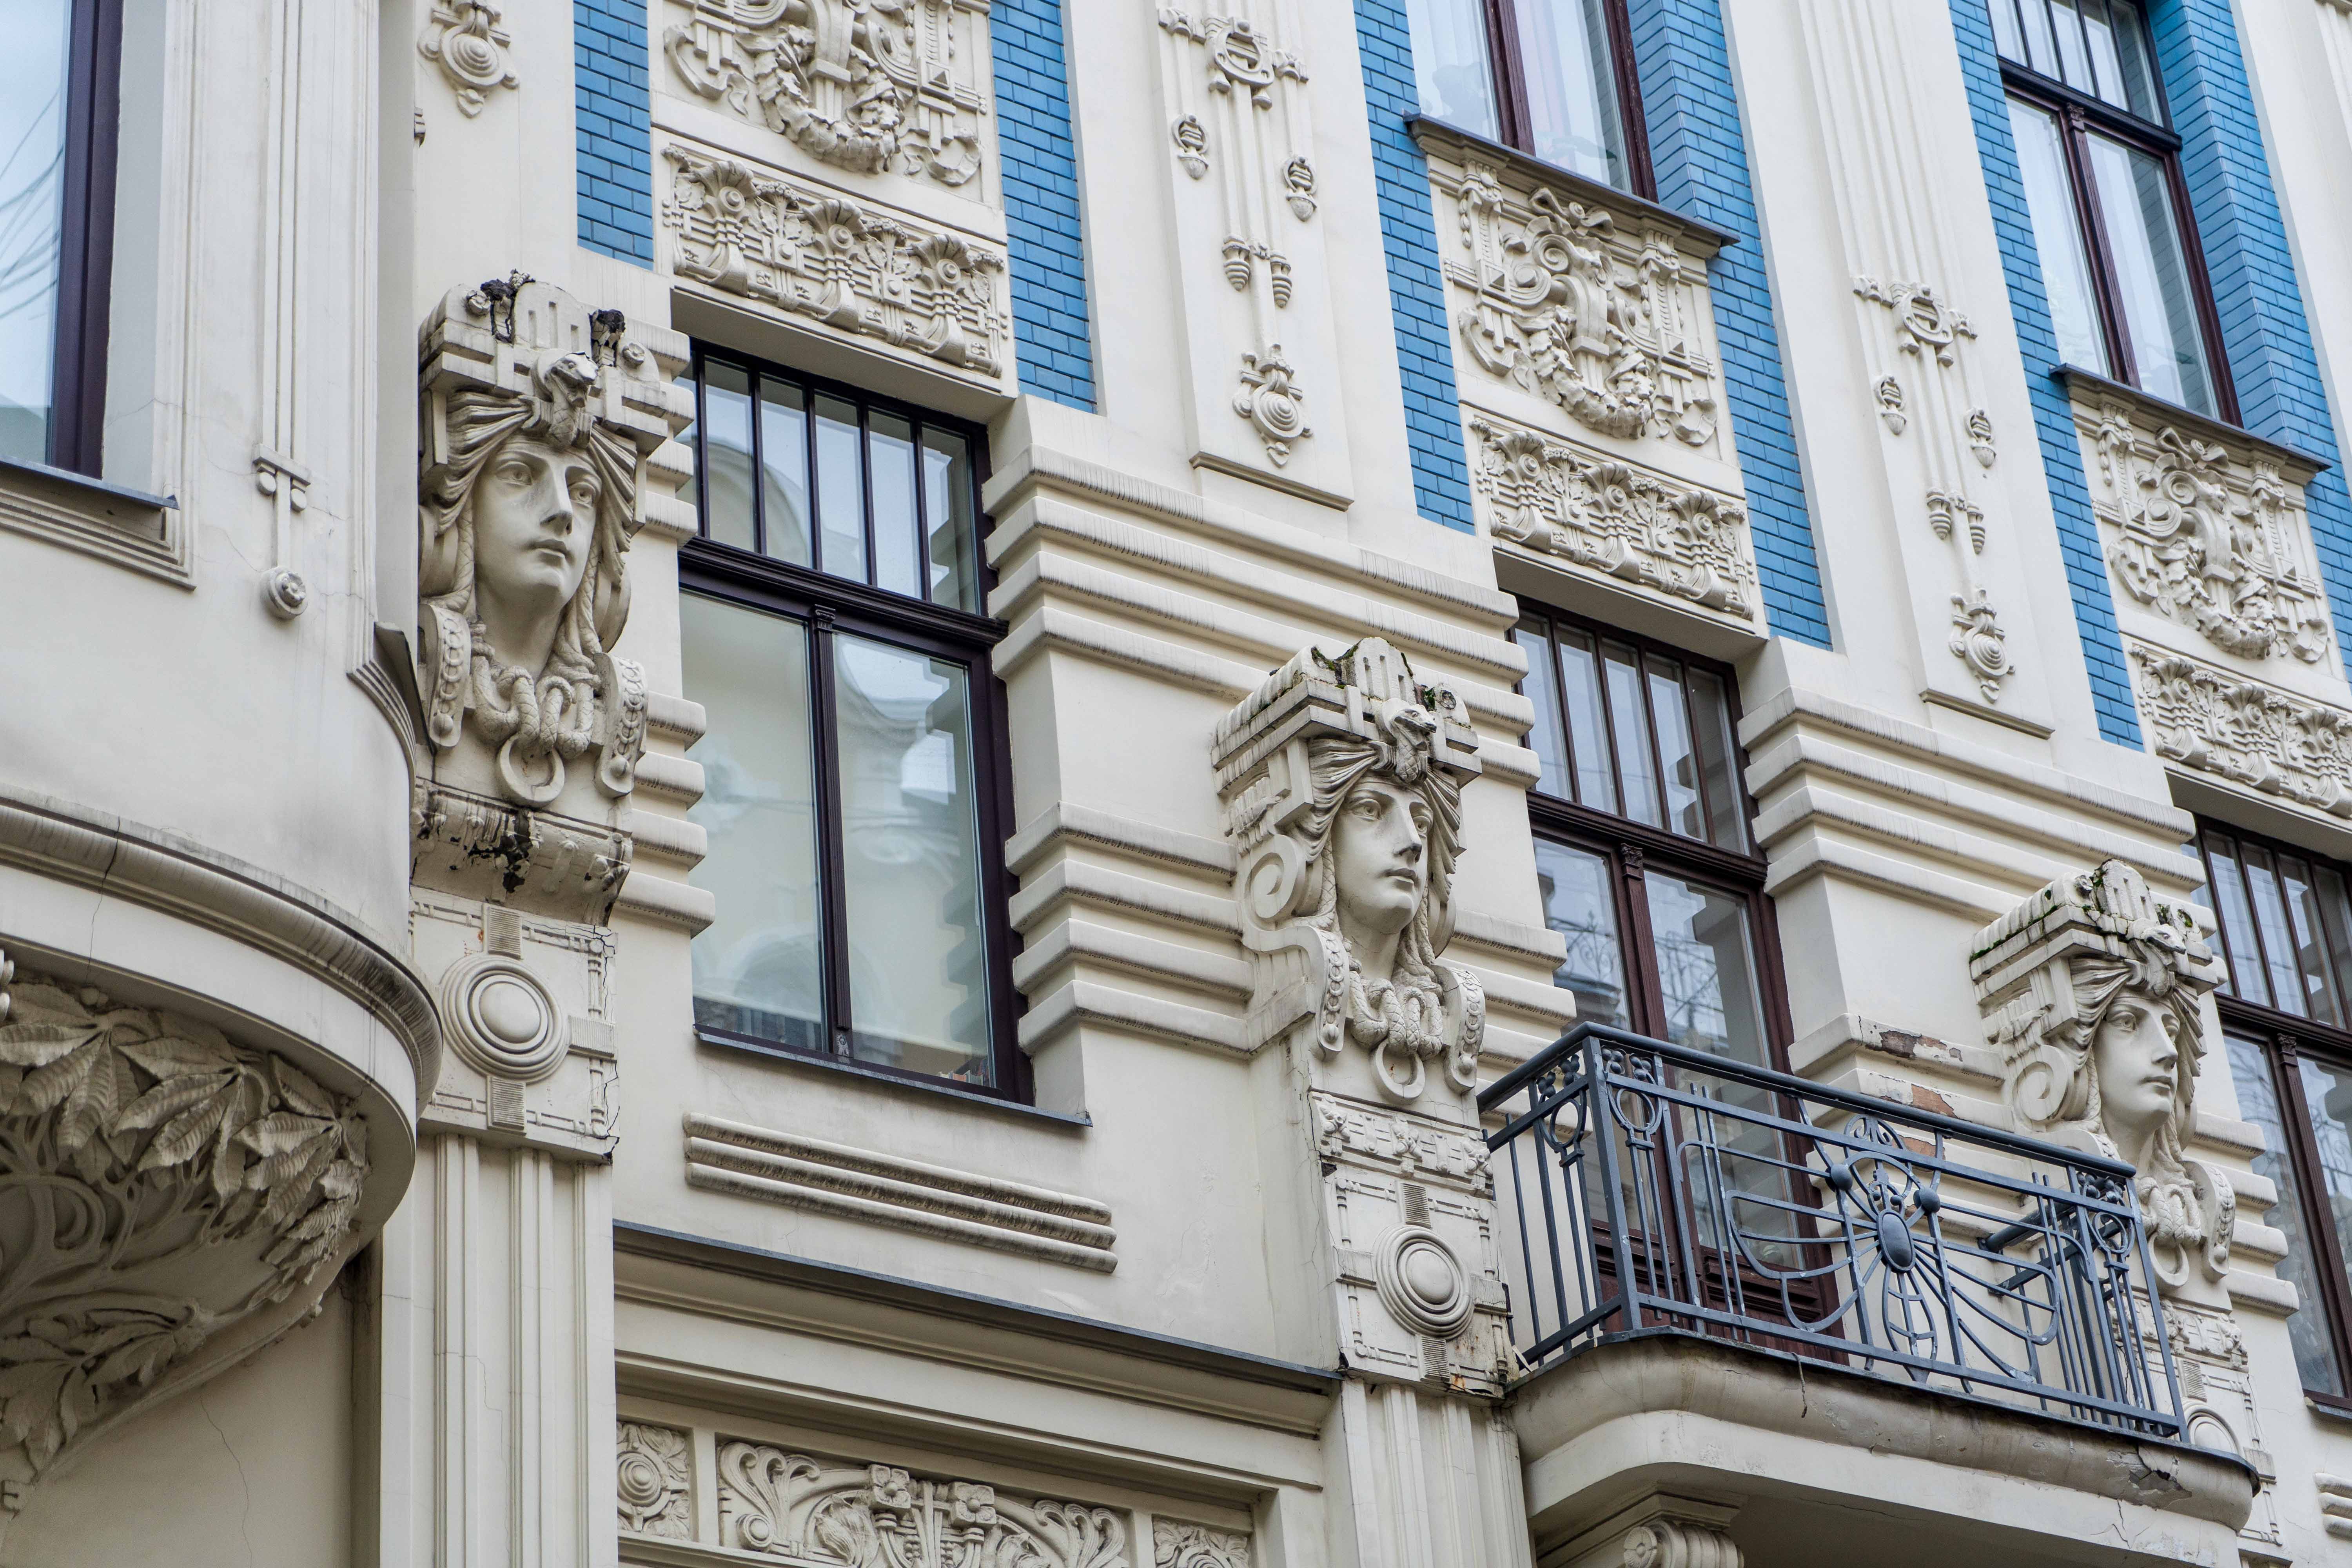 Alberta Iela Architecture Art Nouveau Visiter Riga Odysight Blog Voyage